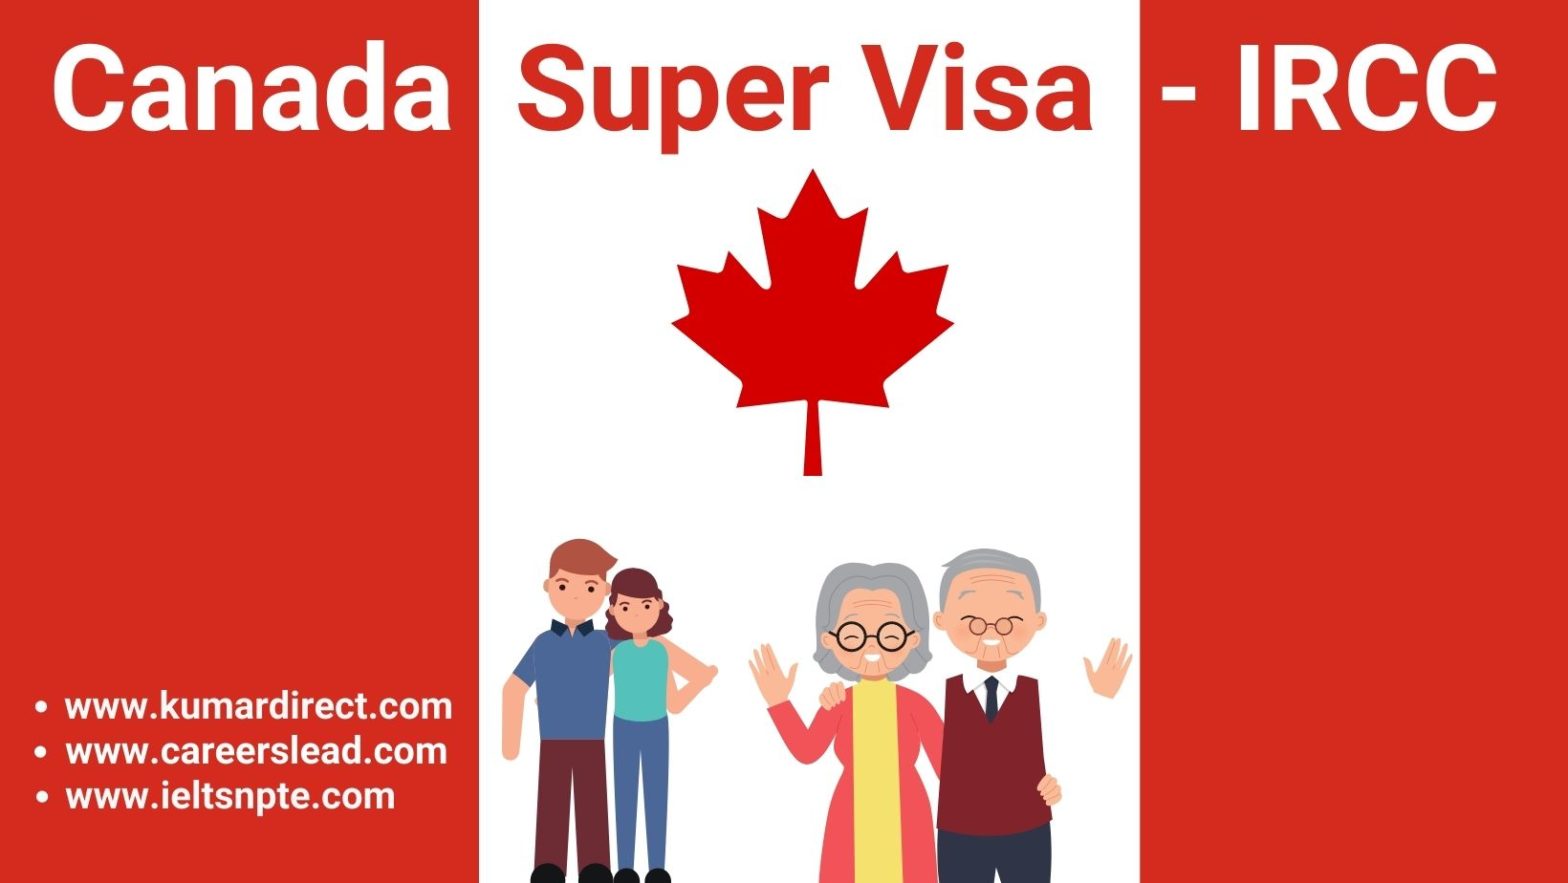 Canada Super Visa - IRCC